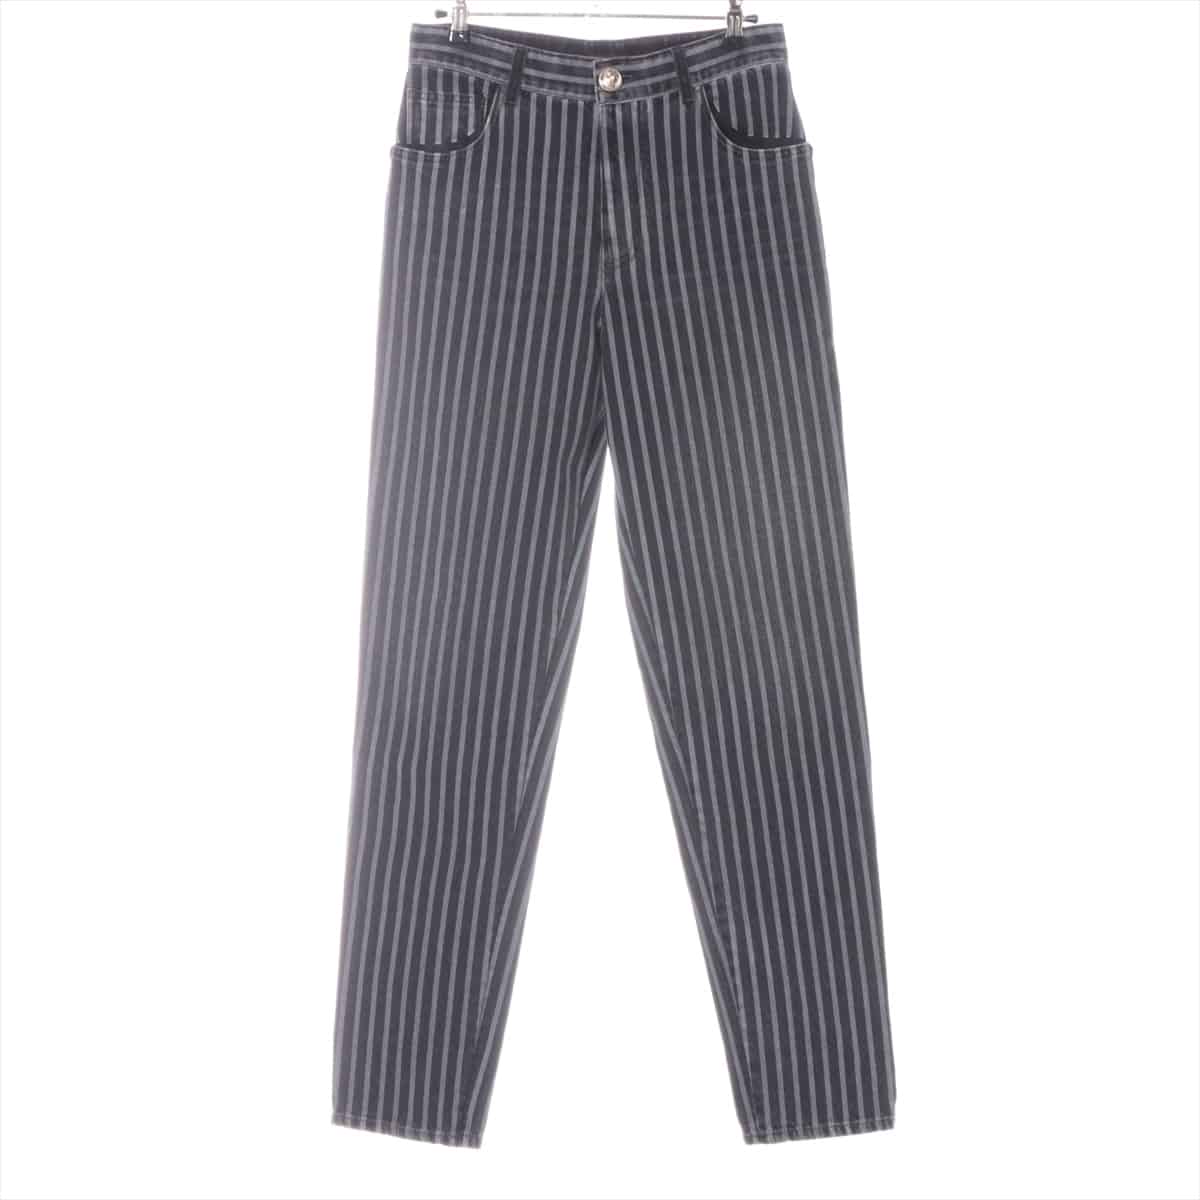 Chanel Coco Button P65 Cotton Denim pants 36 Ladies' Black x Gray  stripes